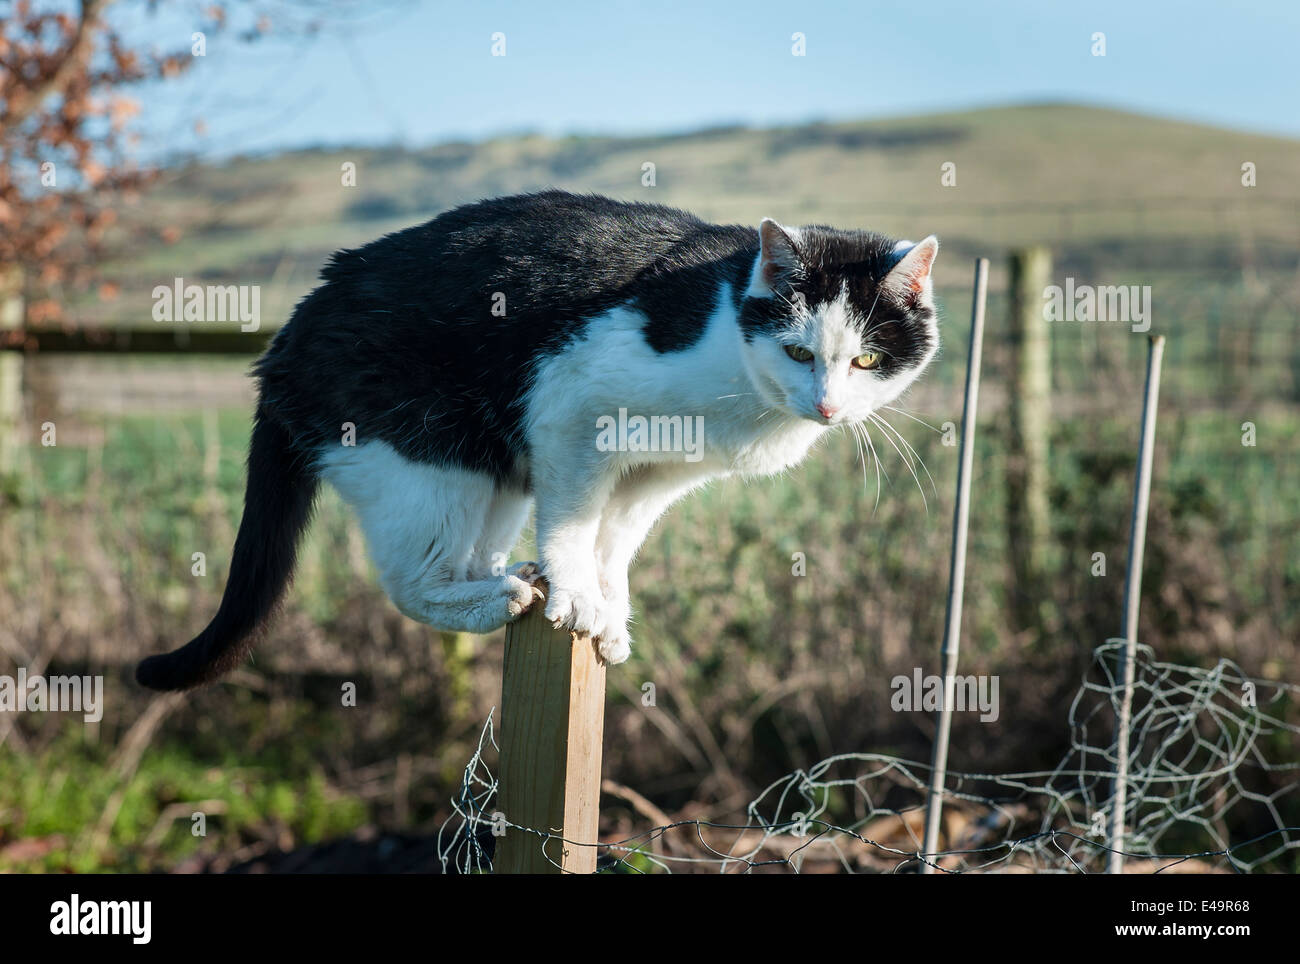 Black And White Cat gehockt Garten Post in alert Körperhaltung während der Jagd Stockfoto